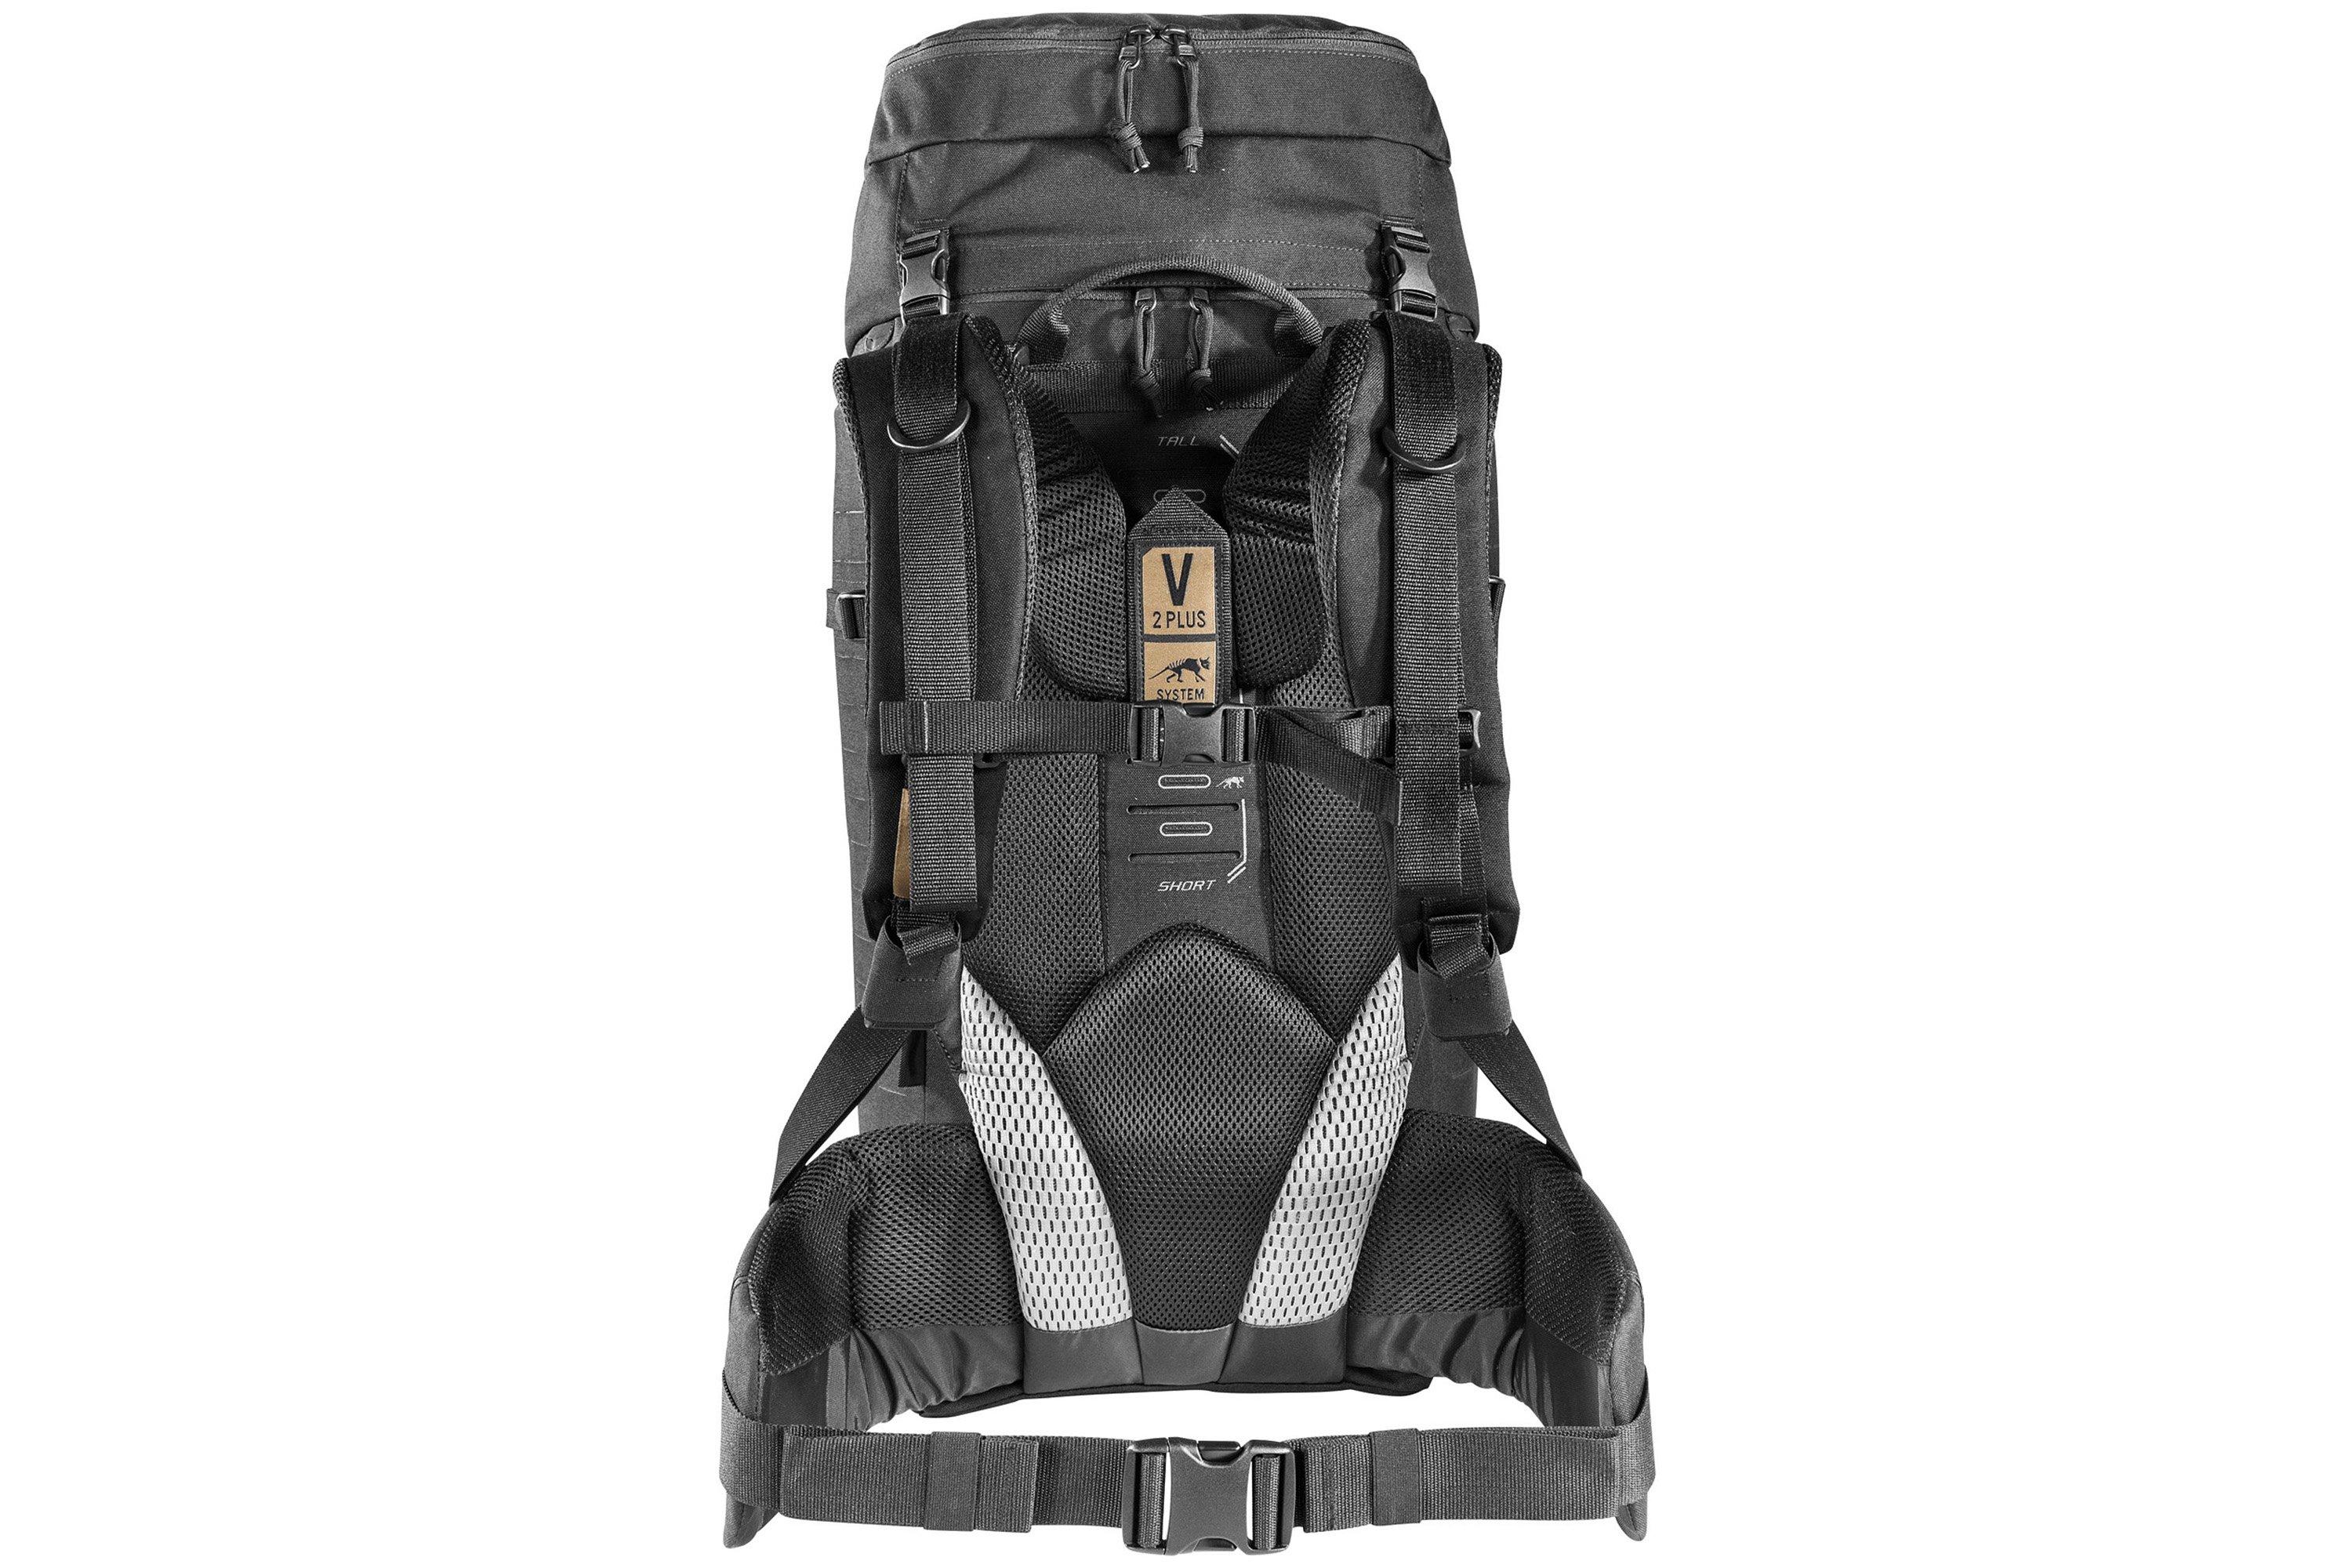 Tasmanian Tiger Modular Pack 45 Plus 7546-040, black, backpack  Advantageously shopping at